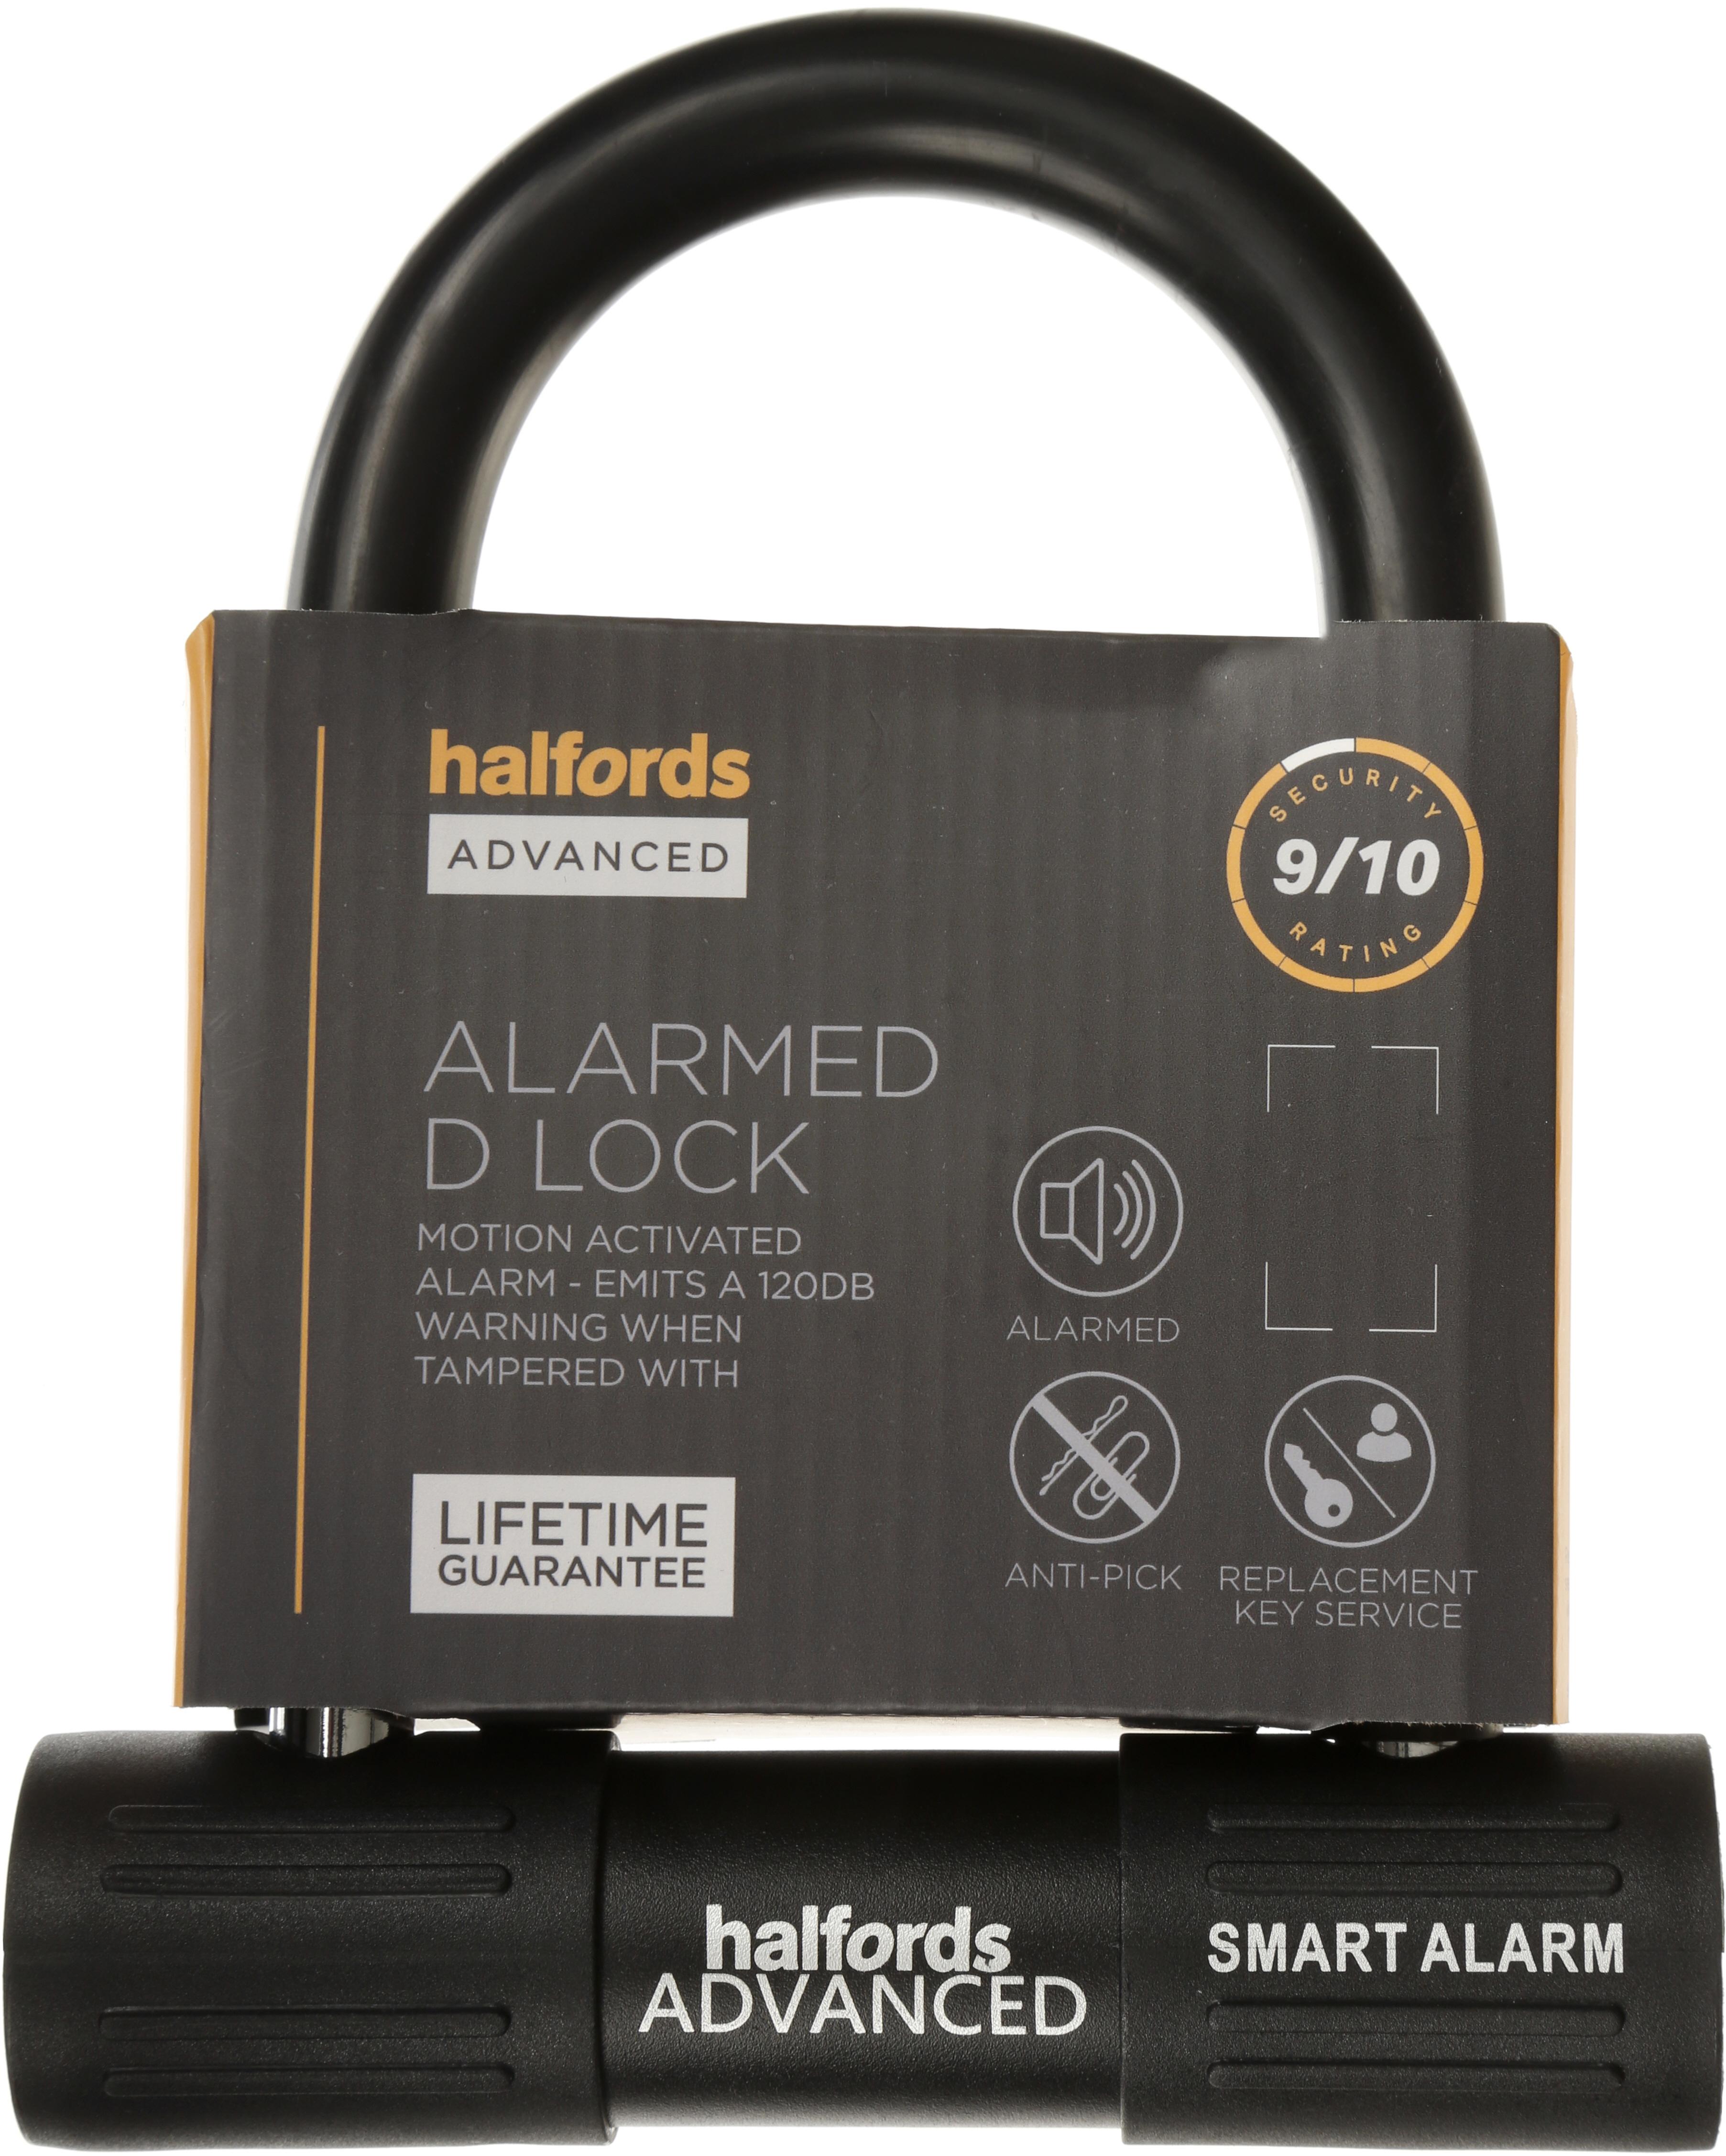 halfords bike locks